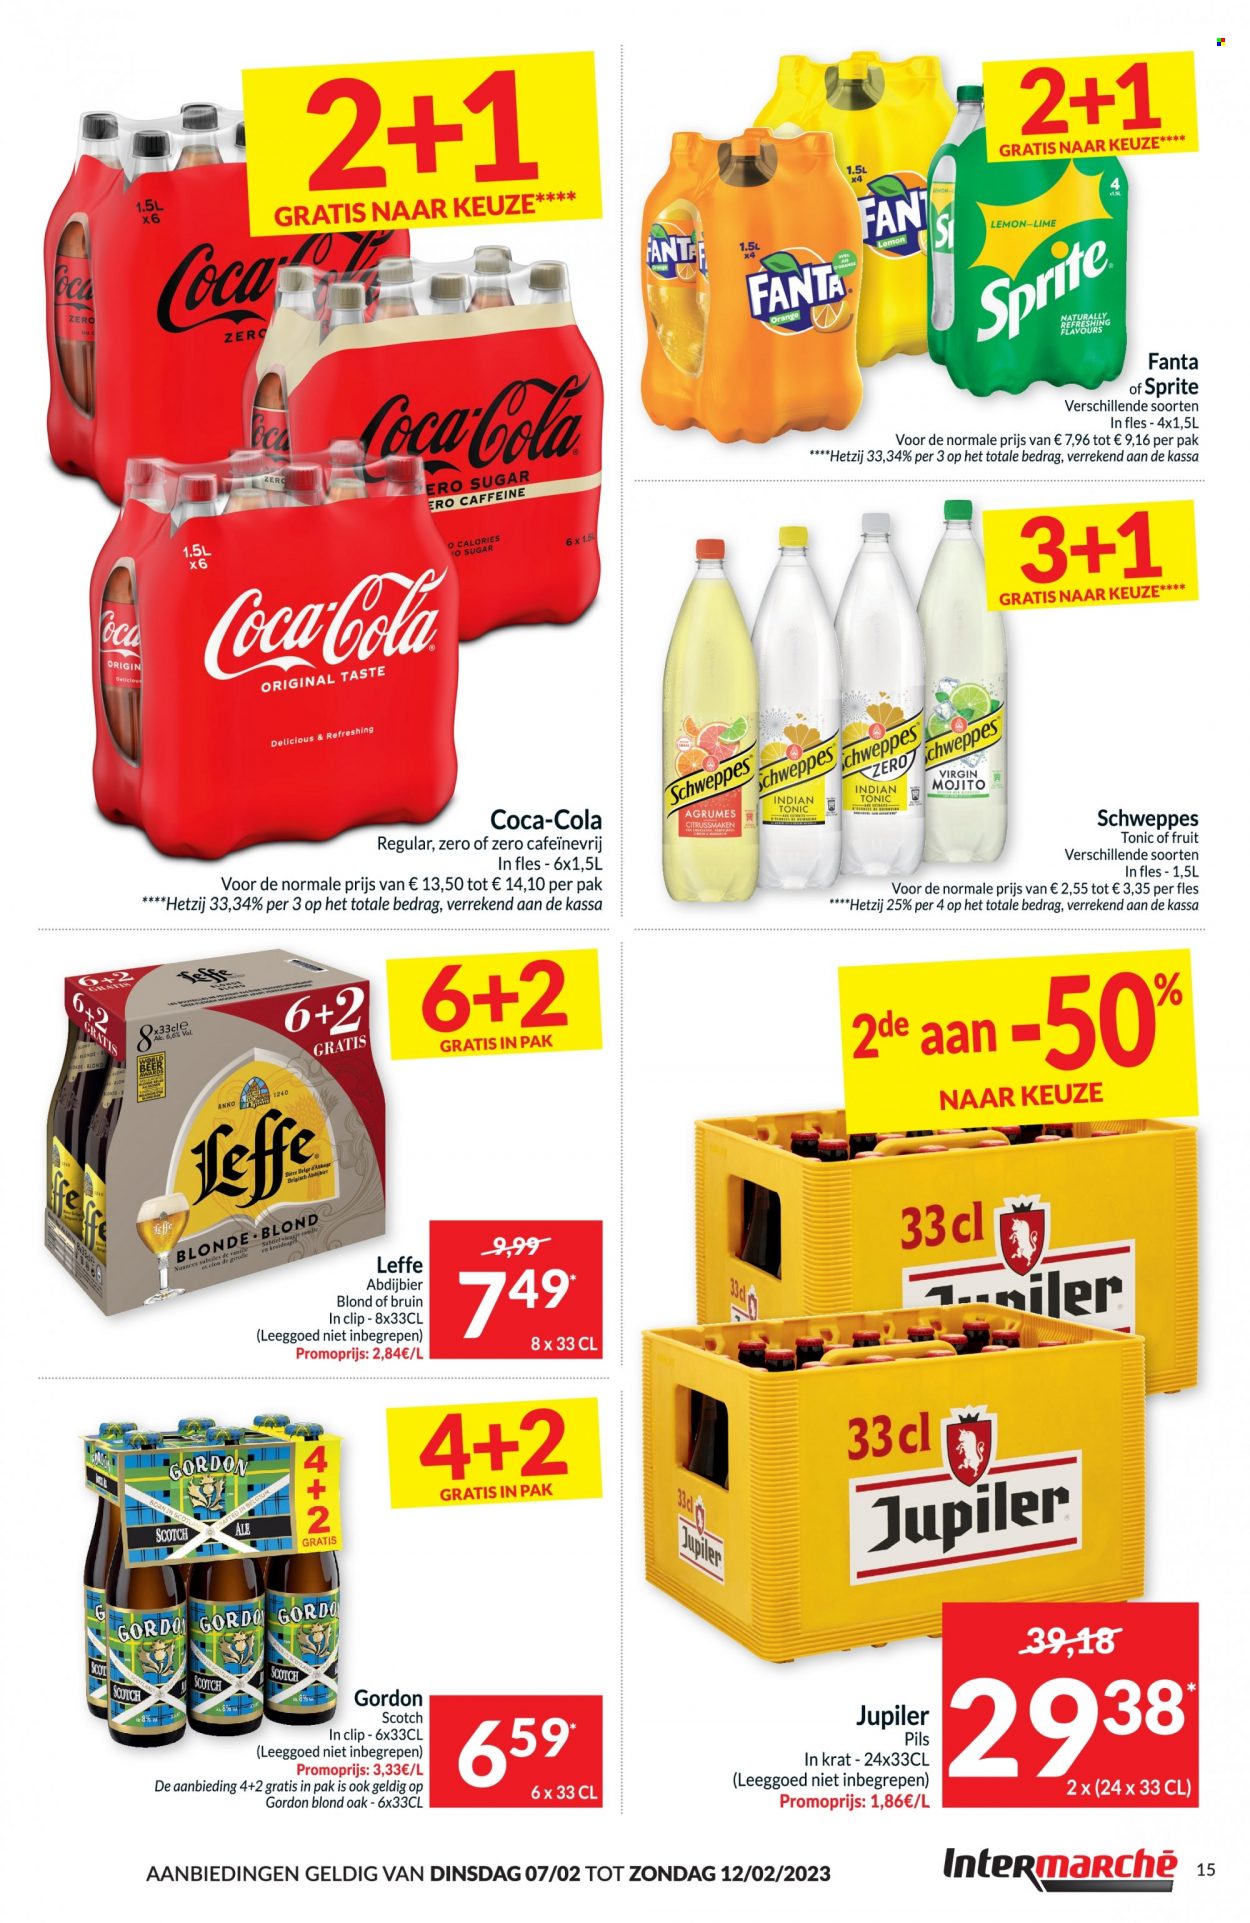 thumbnail - Intermarché-aanbieding - 07/02/2023 - 12/02/2023 -  producten in de aanbieding - Leffe, Jupiler, bier, kruidnagel, kruidnagels, Sprite, Schweppes, Fanta, Coca-Cola. Pagina 15.